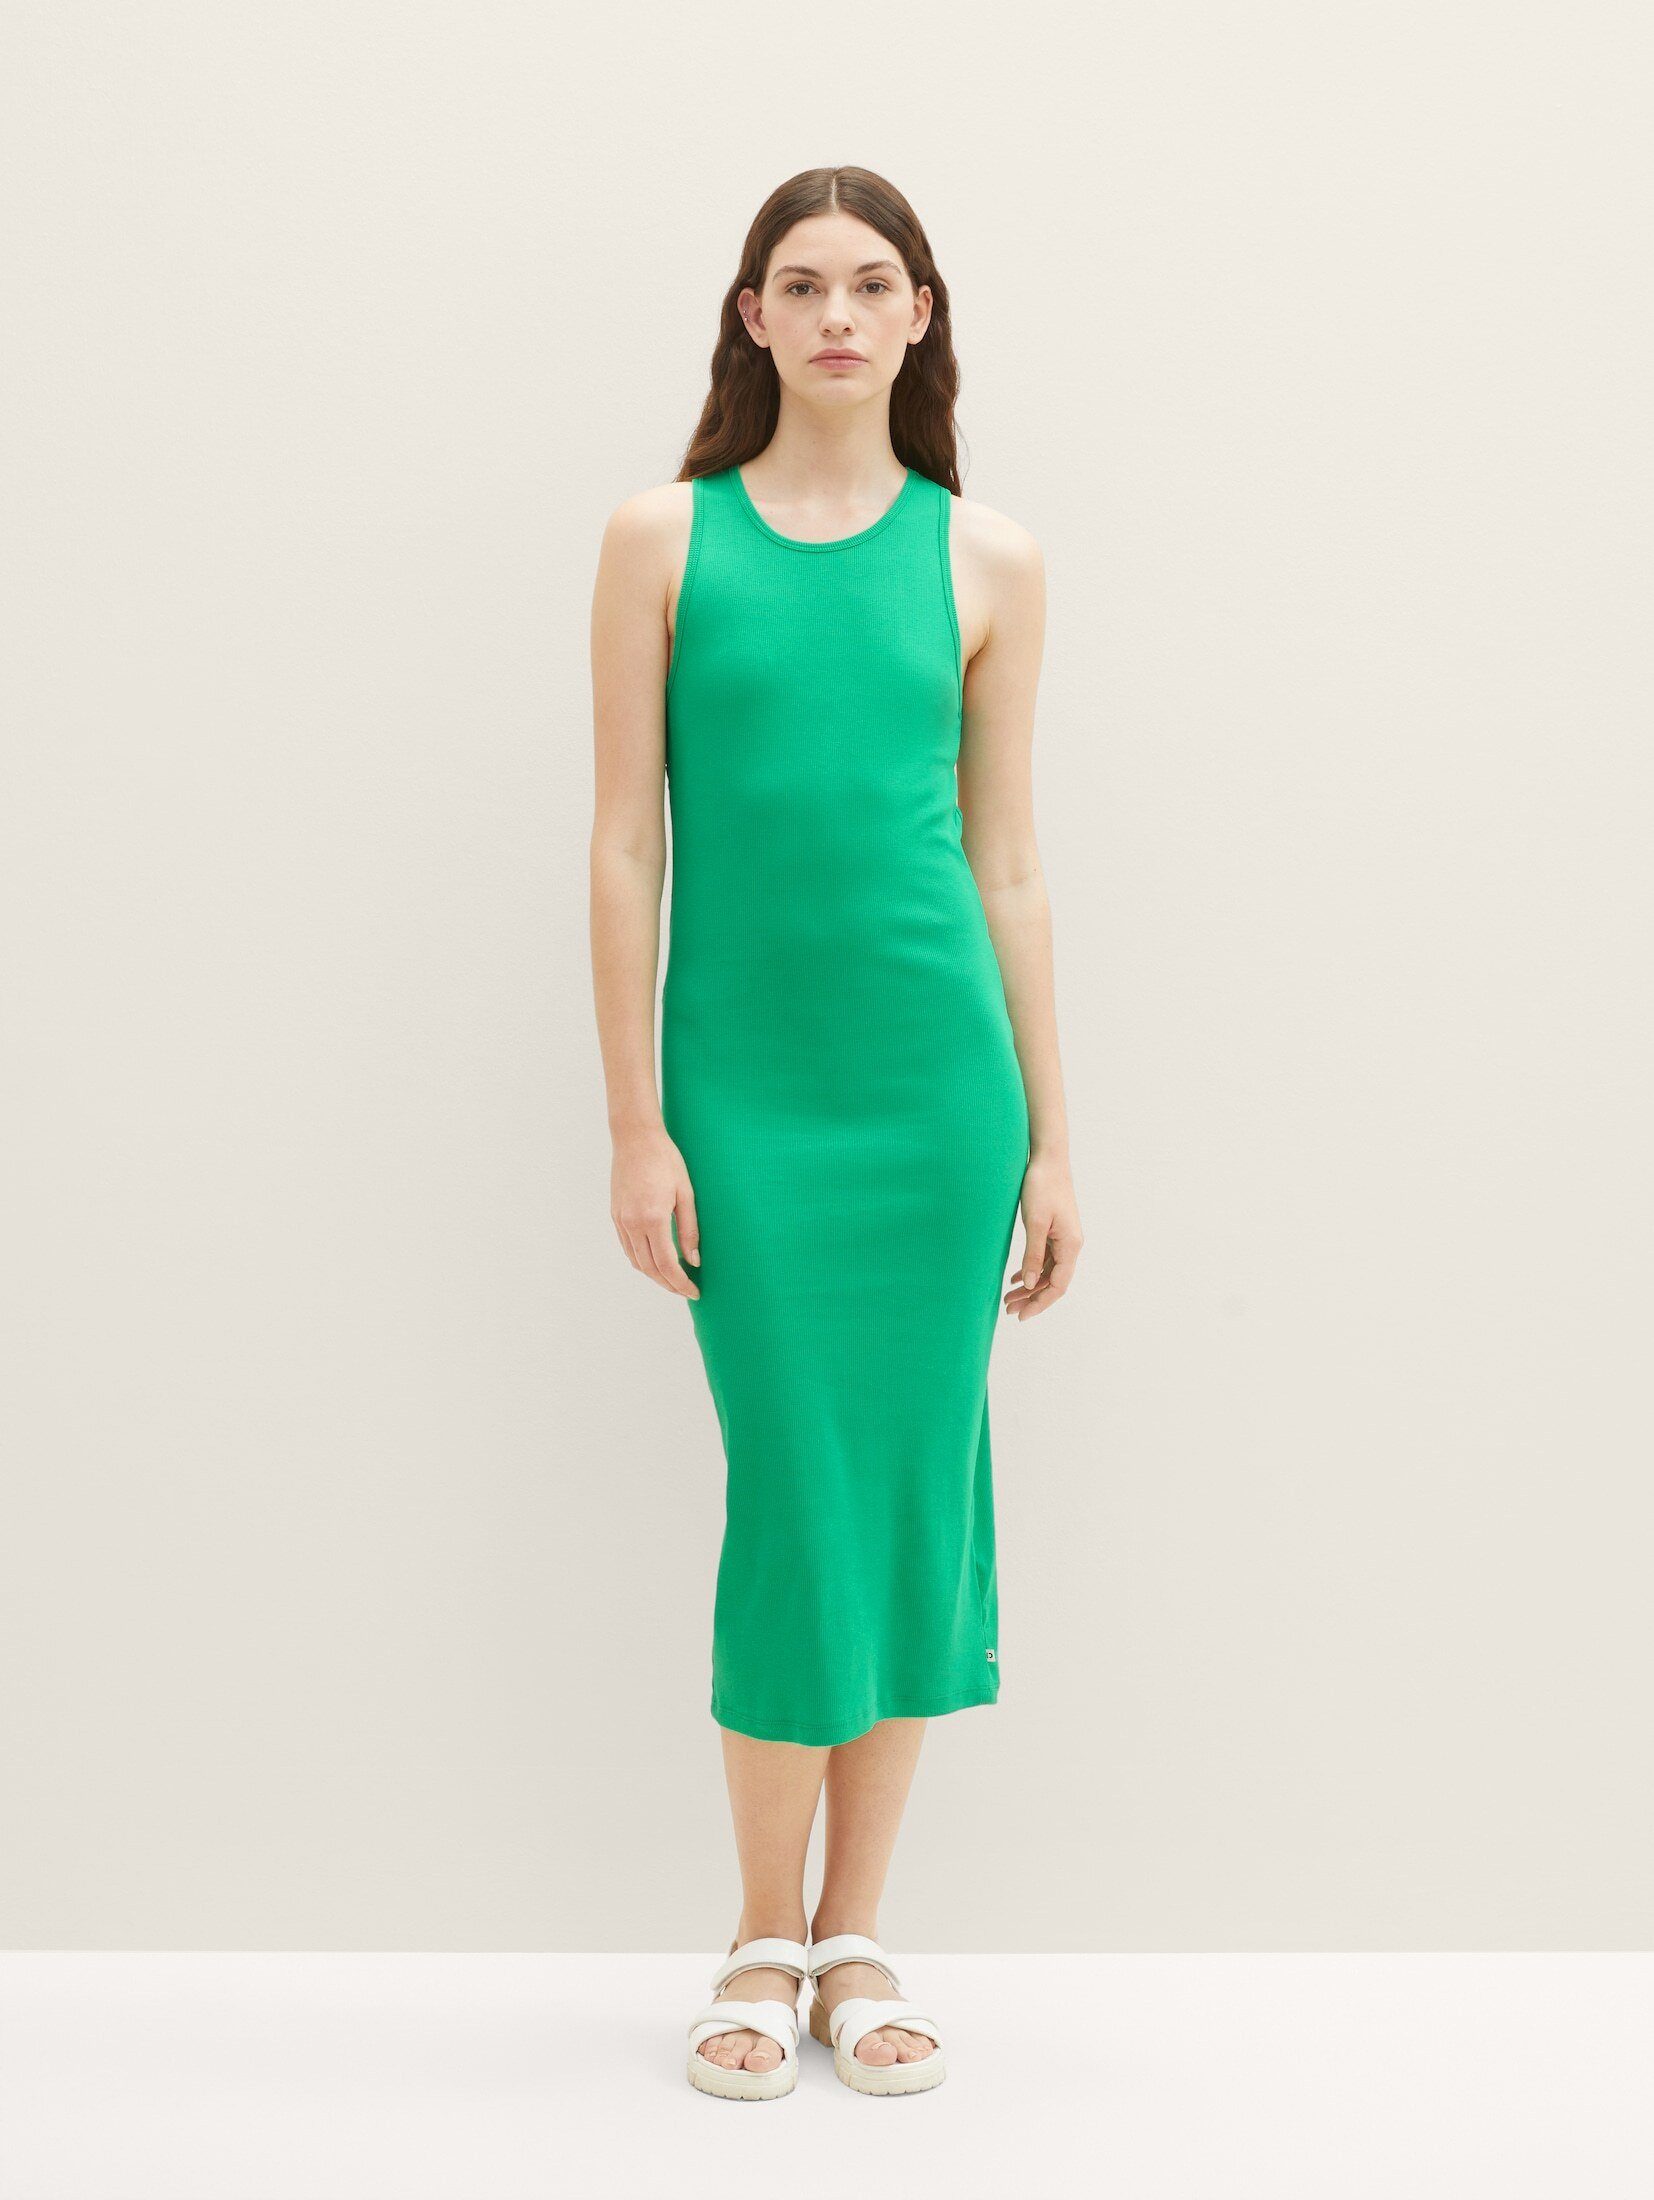 TOM TAILOR Denim Jerseykleid Neckholder Kleid mit Rippstruktur vibrant light green